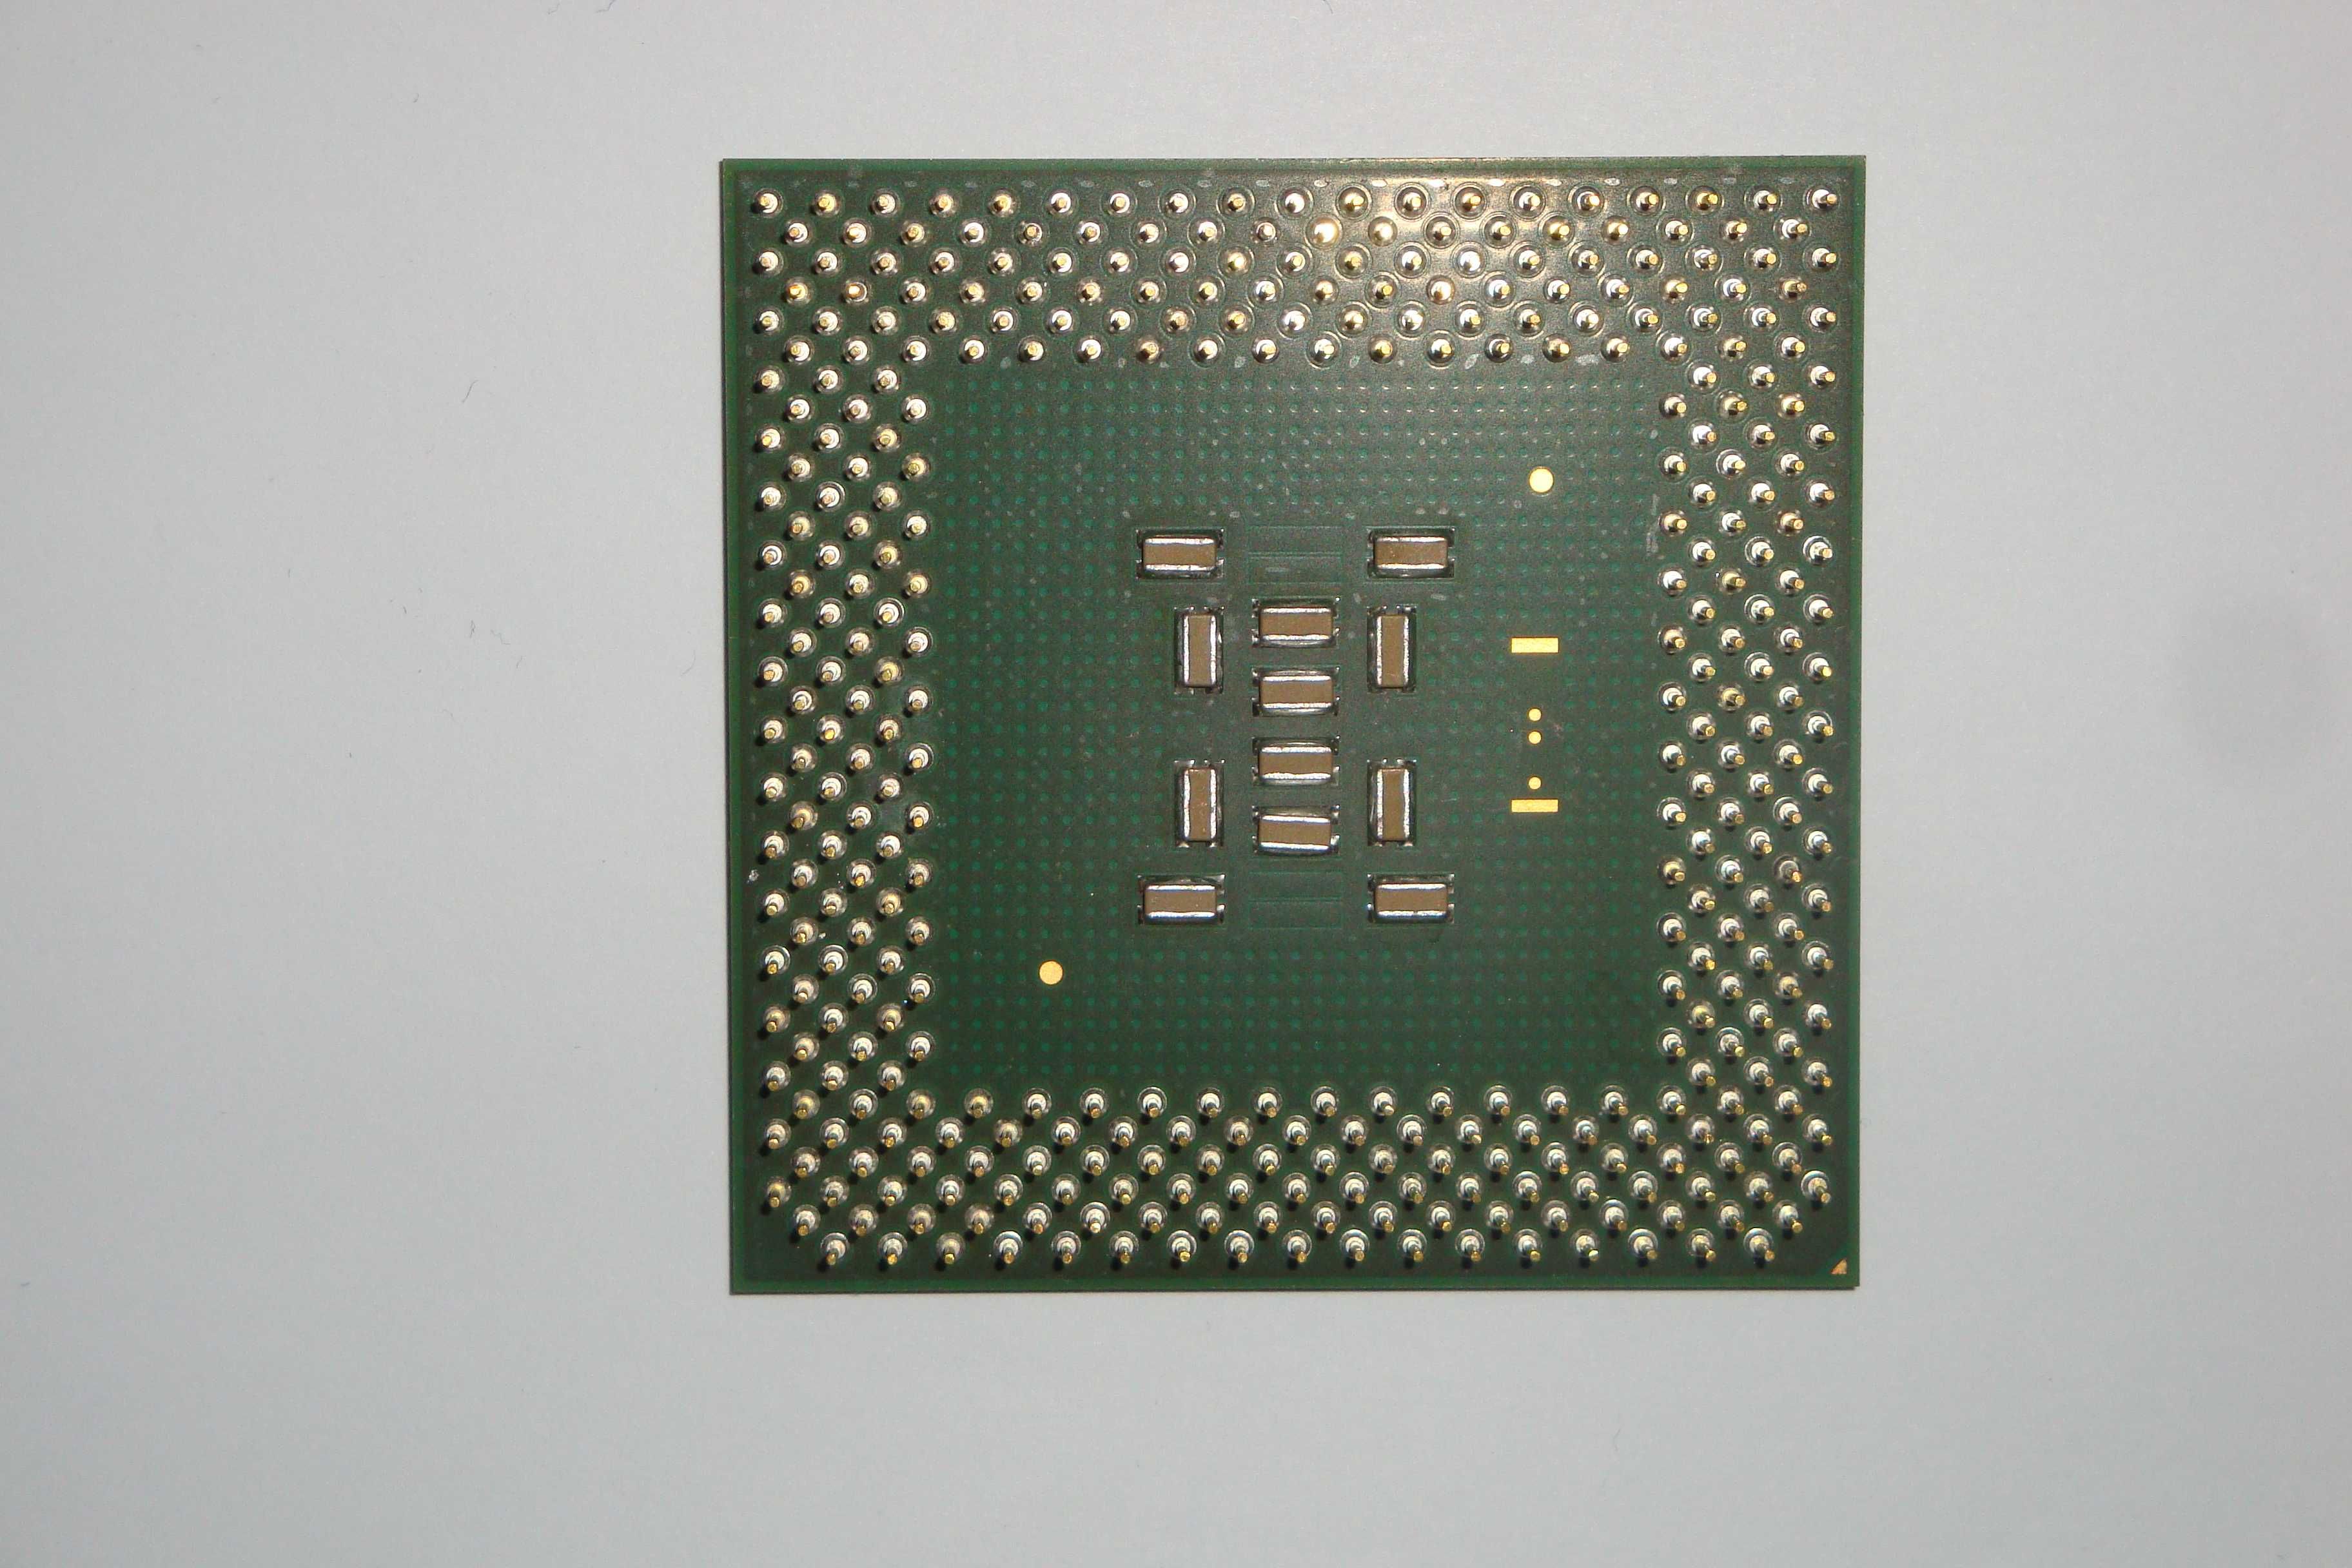 piesa colectie vintage procesor intel pentium 3 667 mhz PGA 370 SL3XW